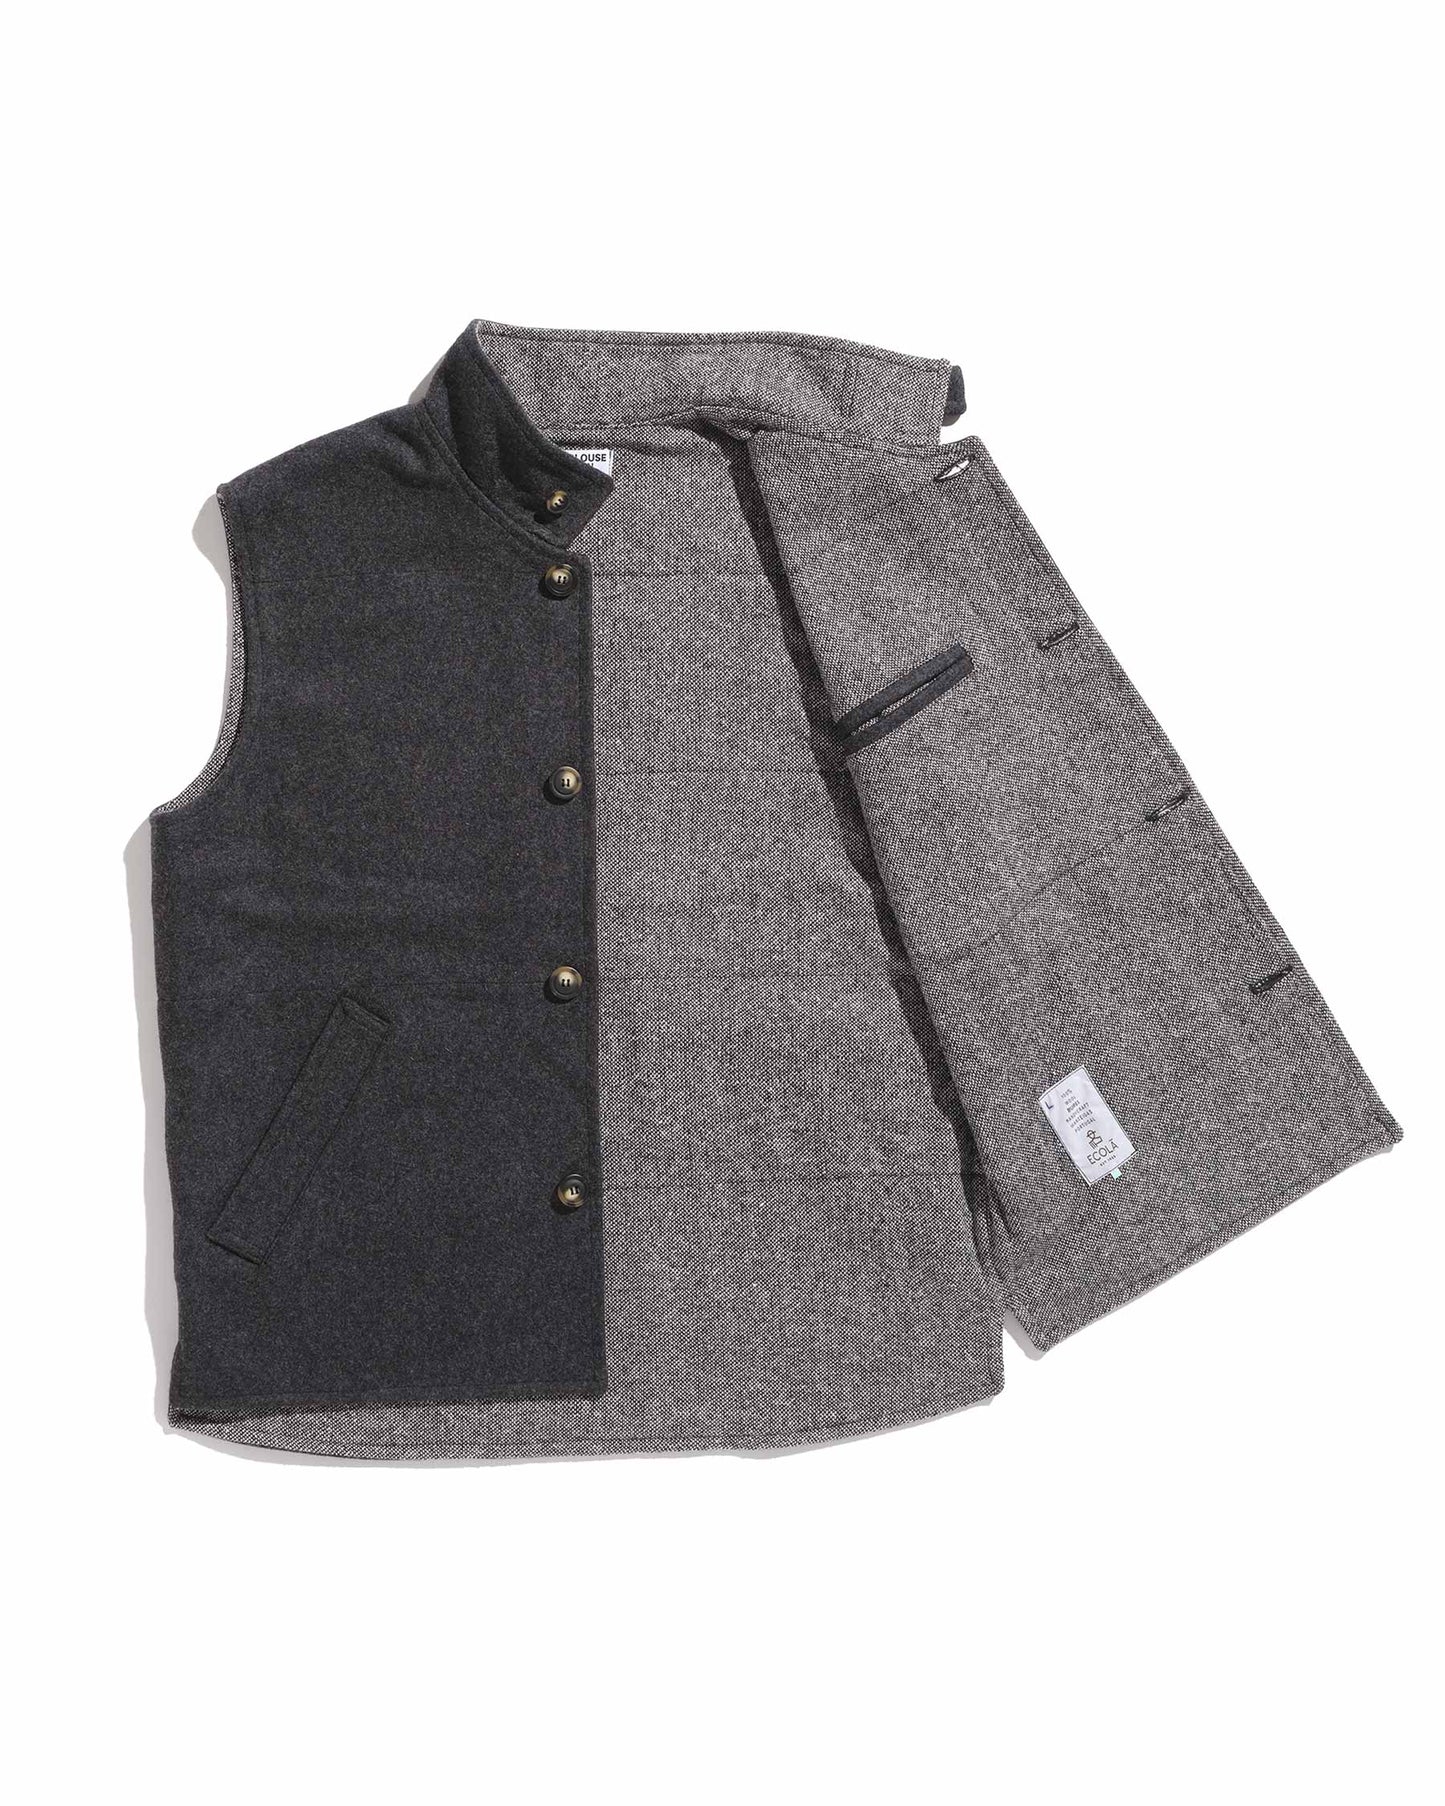 Anthracite burel wool high collar cardigan